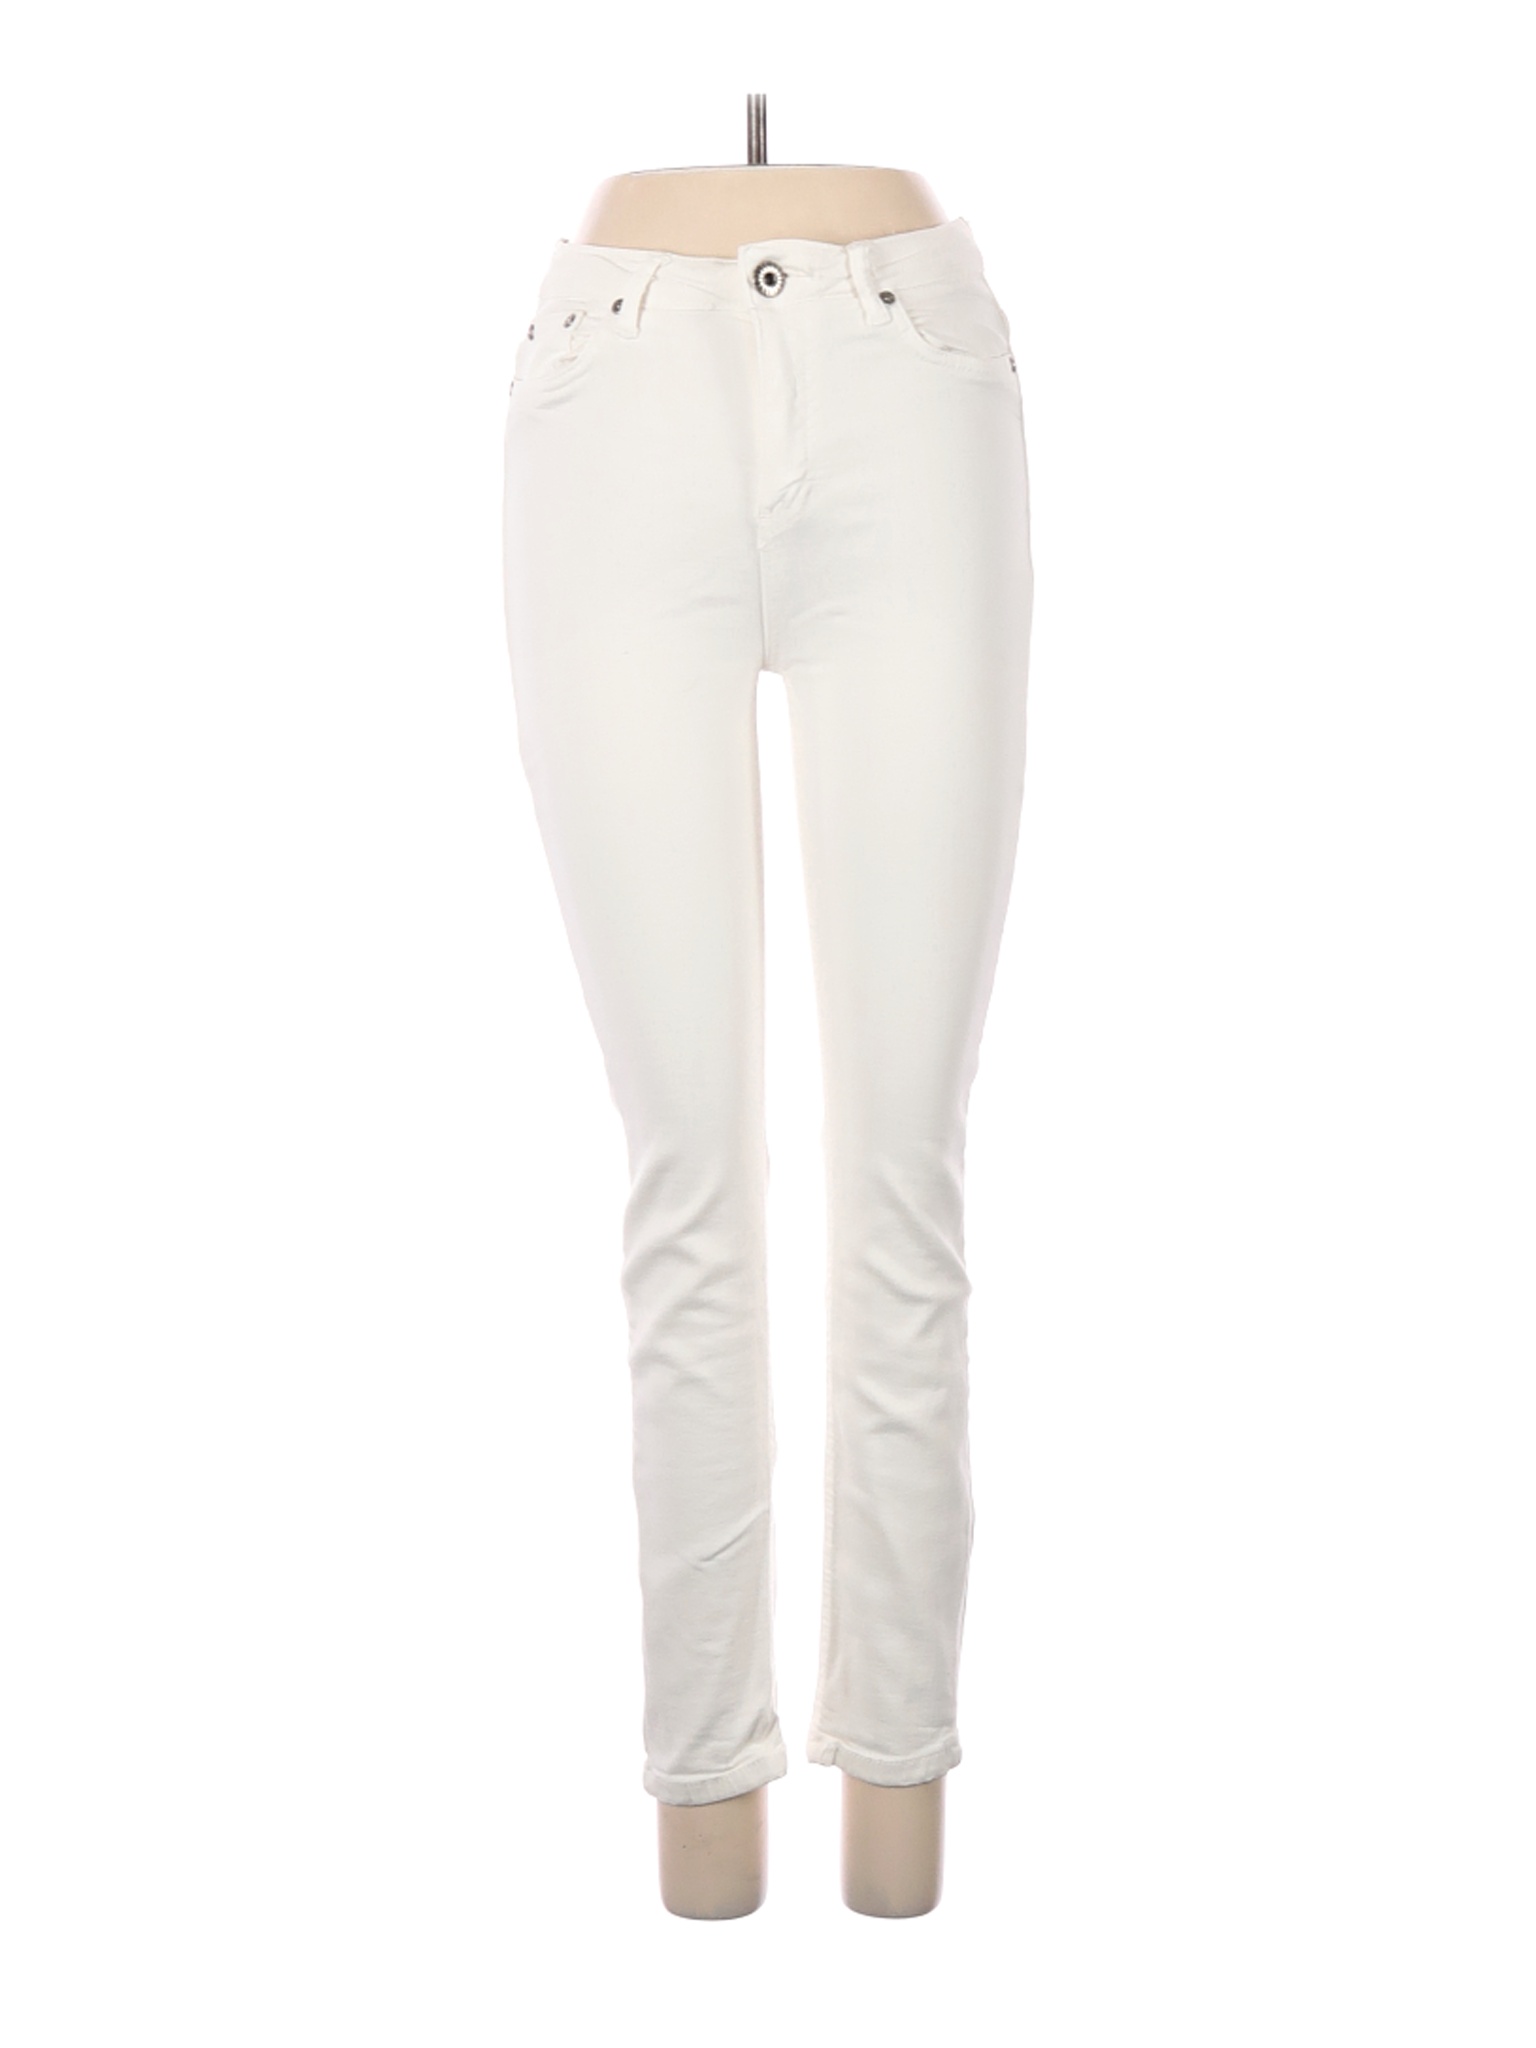 Assorted Brands Women White Jeans 28W | eBay